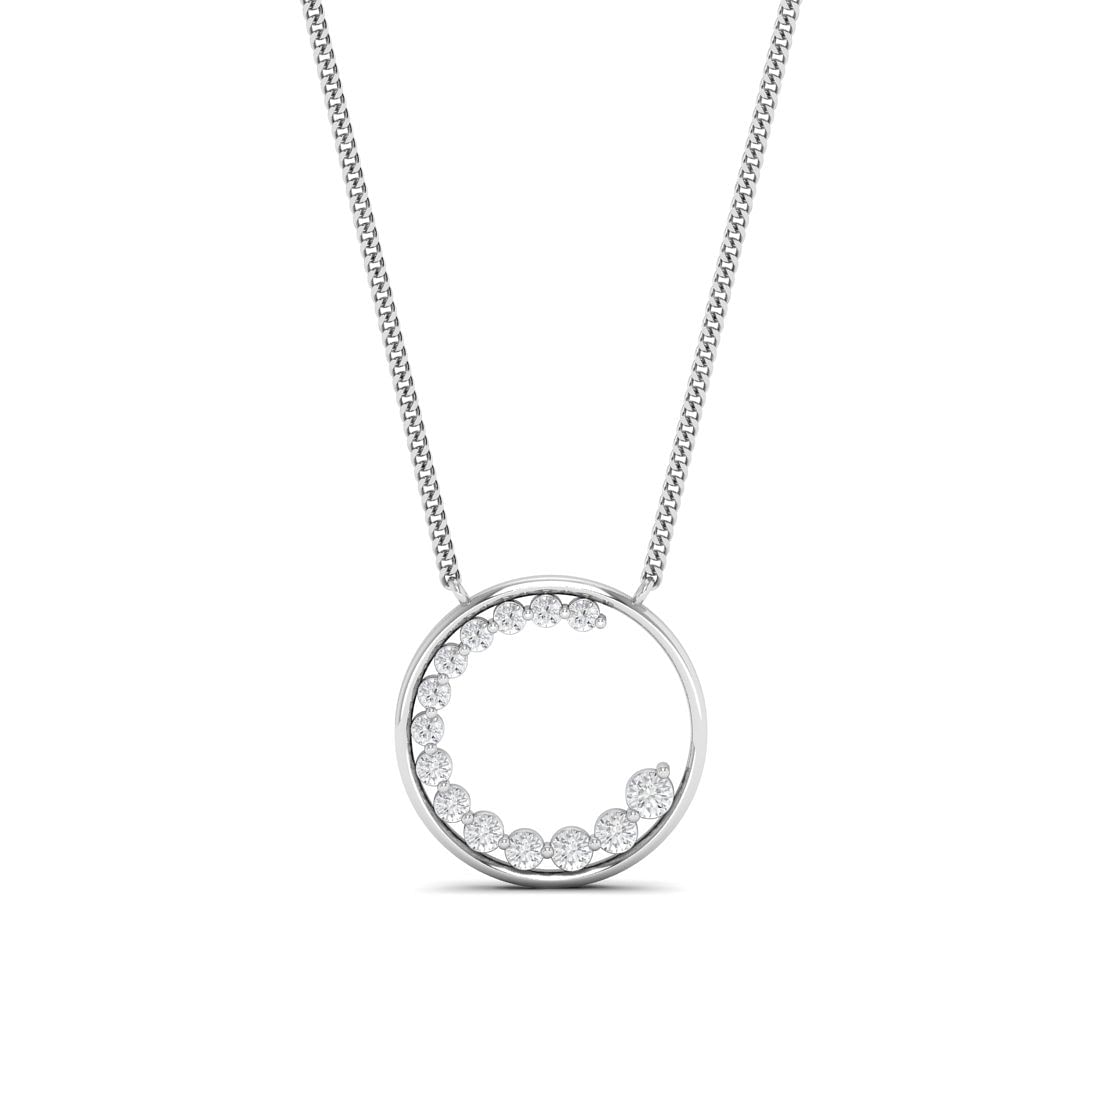 Round Design White Gold Diamond Pendant For Women